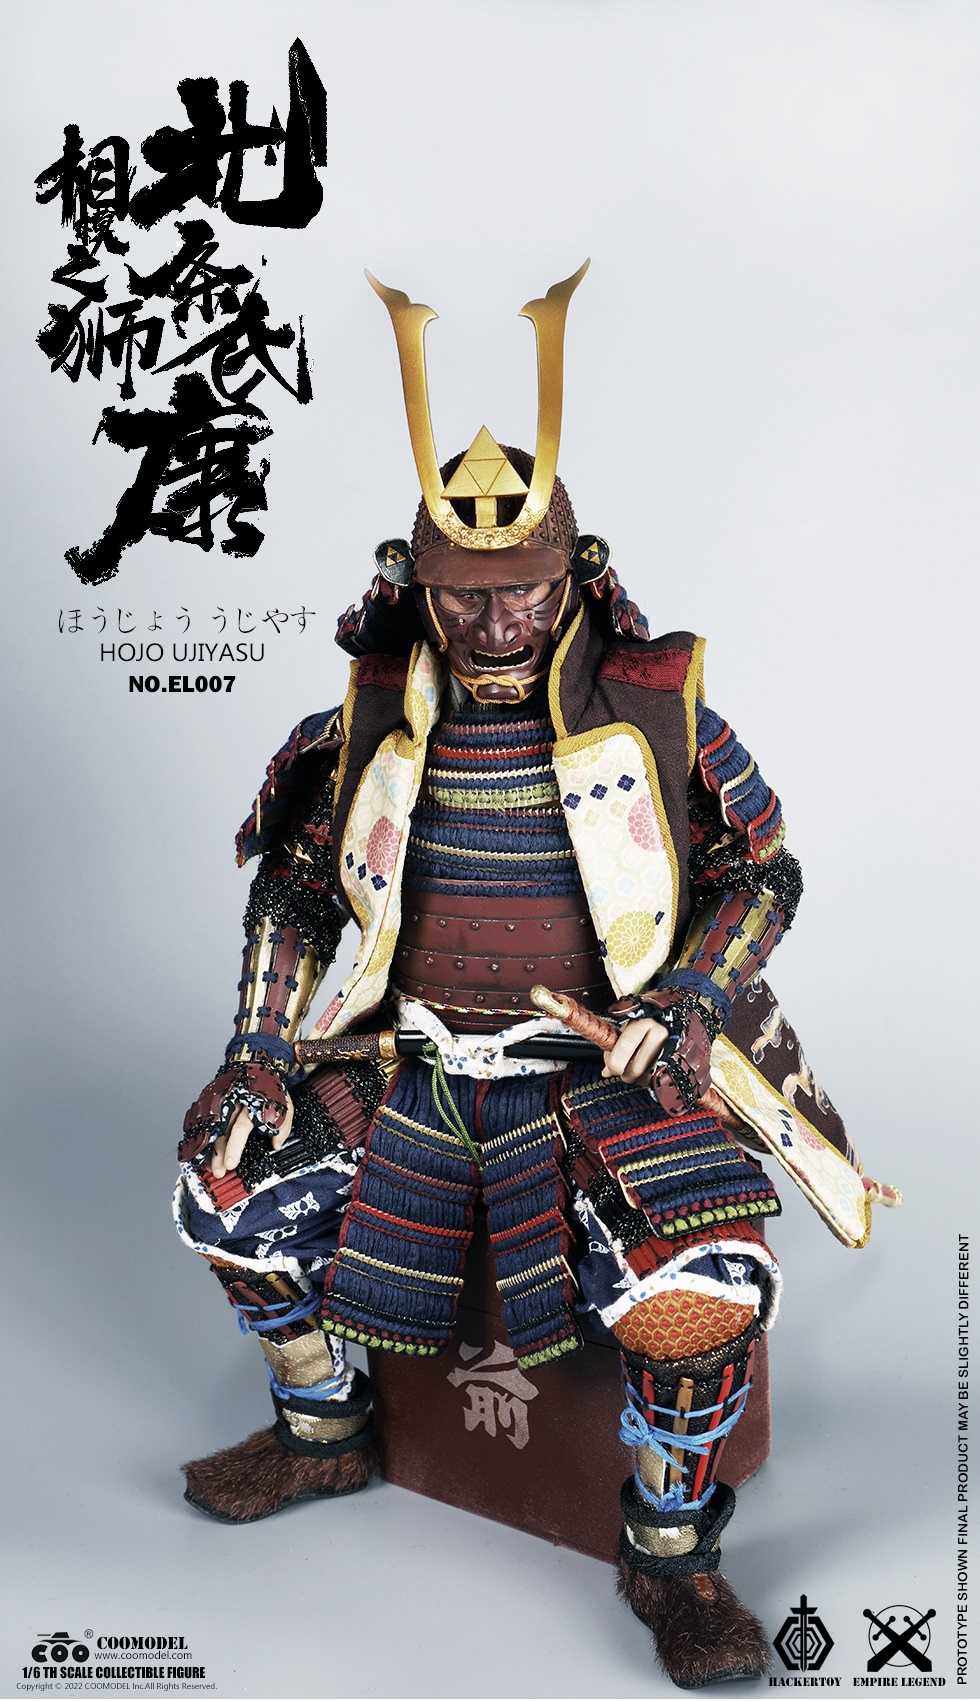 ImperialLegend - NEW PRODUCT: COOMODEL: 1/6 Imperial Legend - Hojo Shiyasu [Pure Copper Standard Edition / Heterochromatic Edition] EL006/EL007 15205810